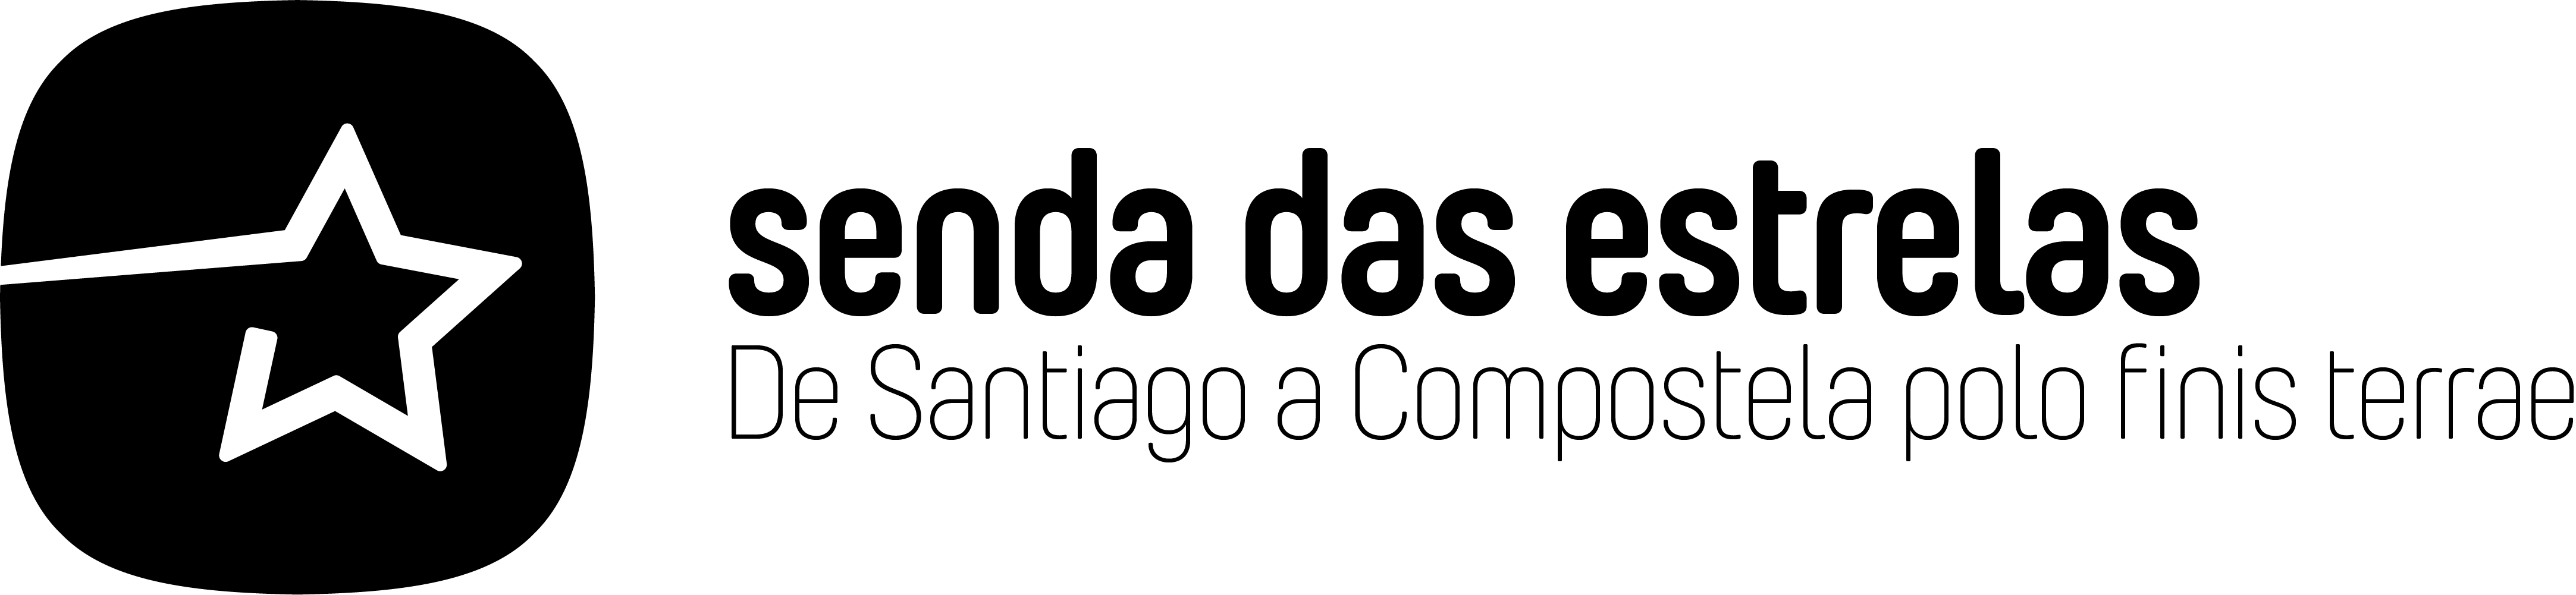 Logotipo de Senda das estrelas